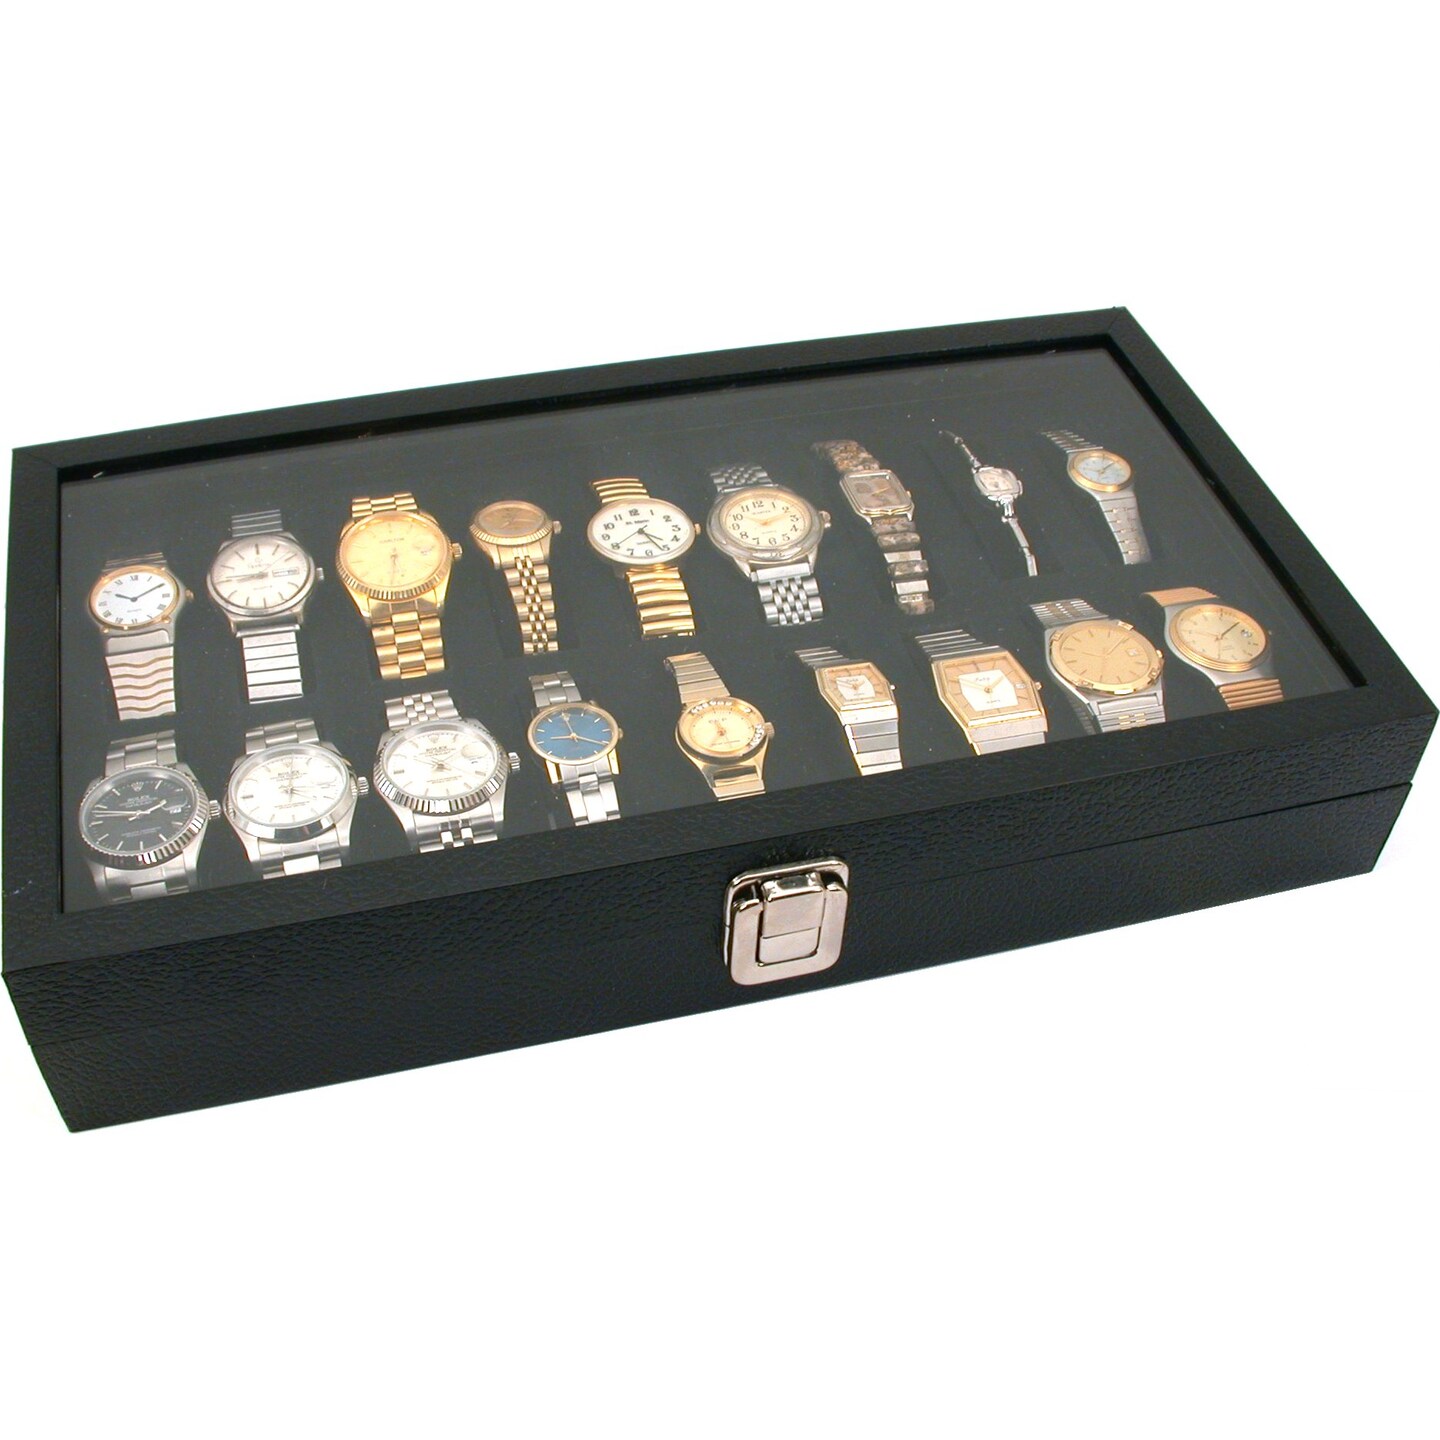 3 18pc Black Watch Travel Trays Showcase Display Case Unit W/ Glass Top